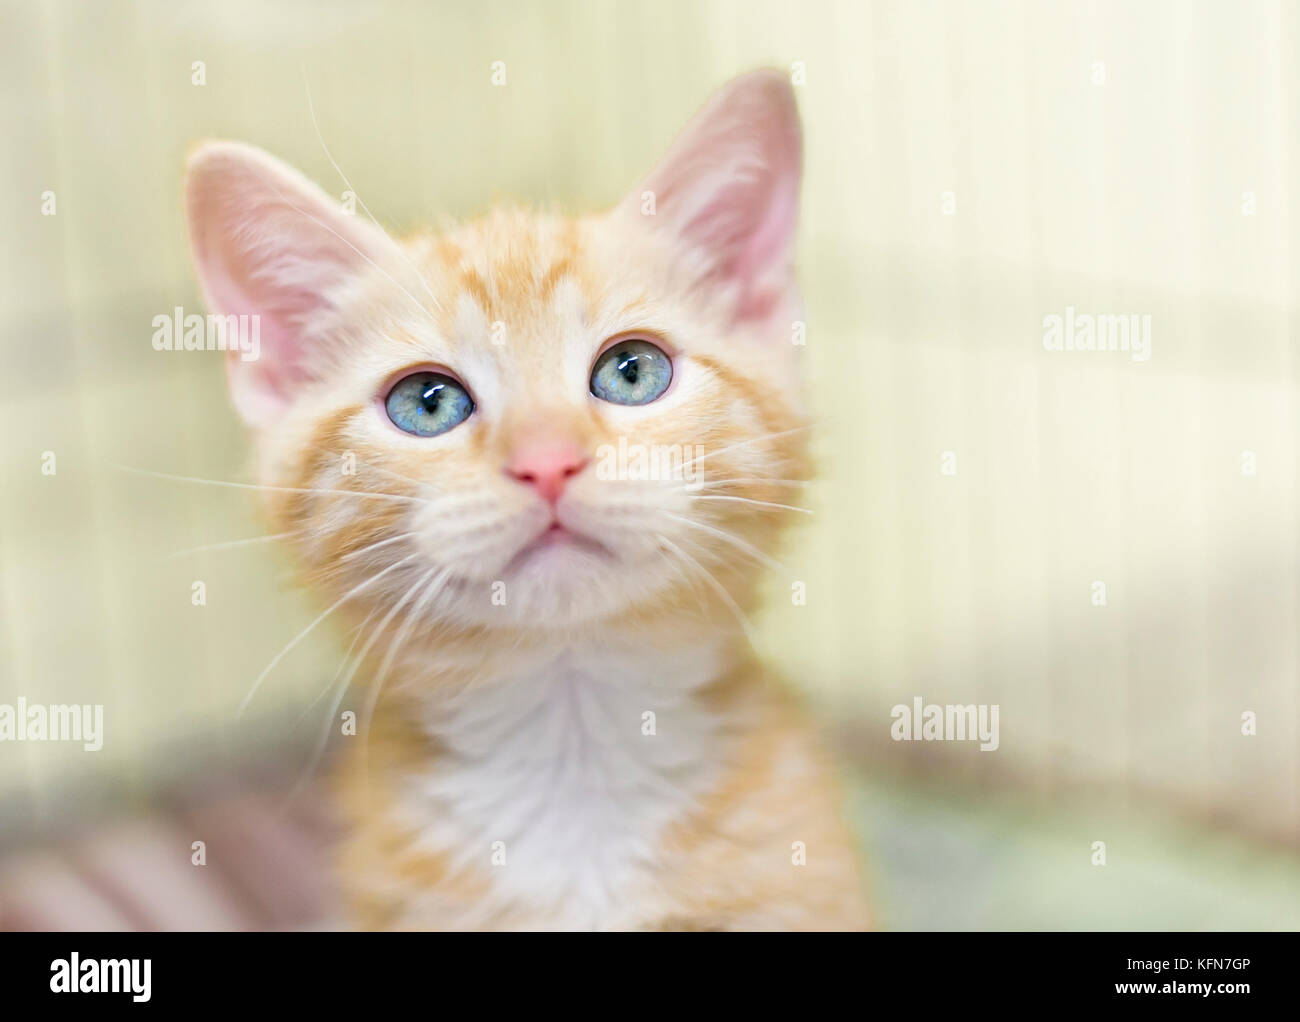 OJ the Kitty on X: New #pfp #Kitty #cute #kitten #tabby